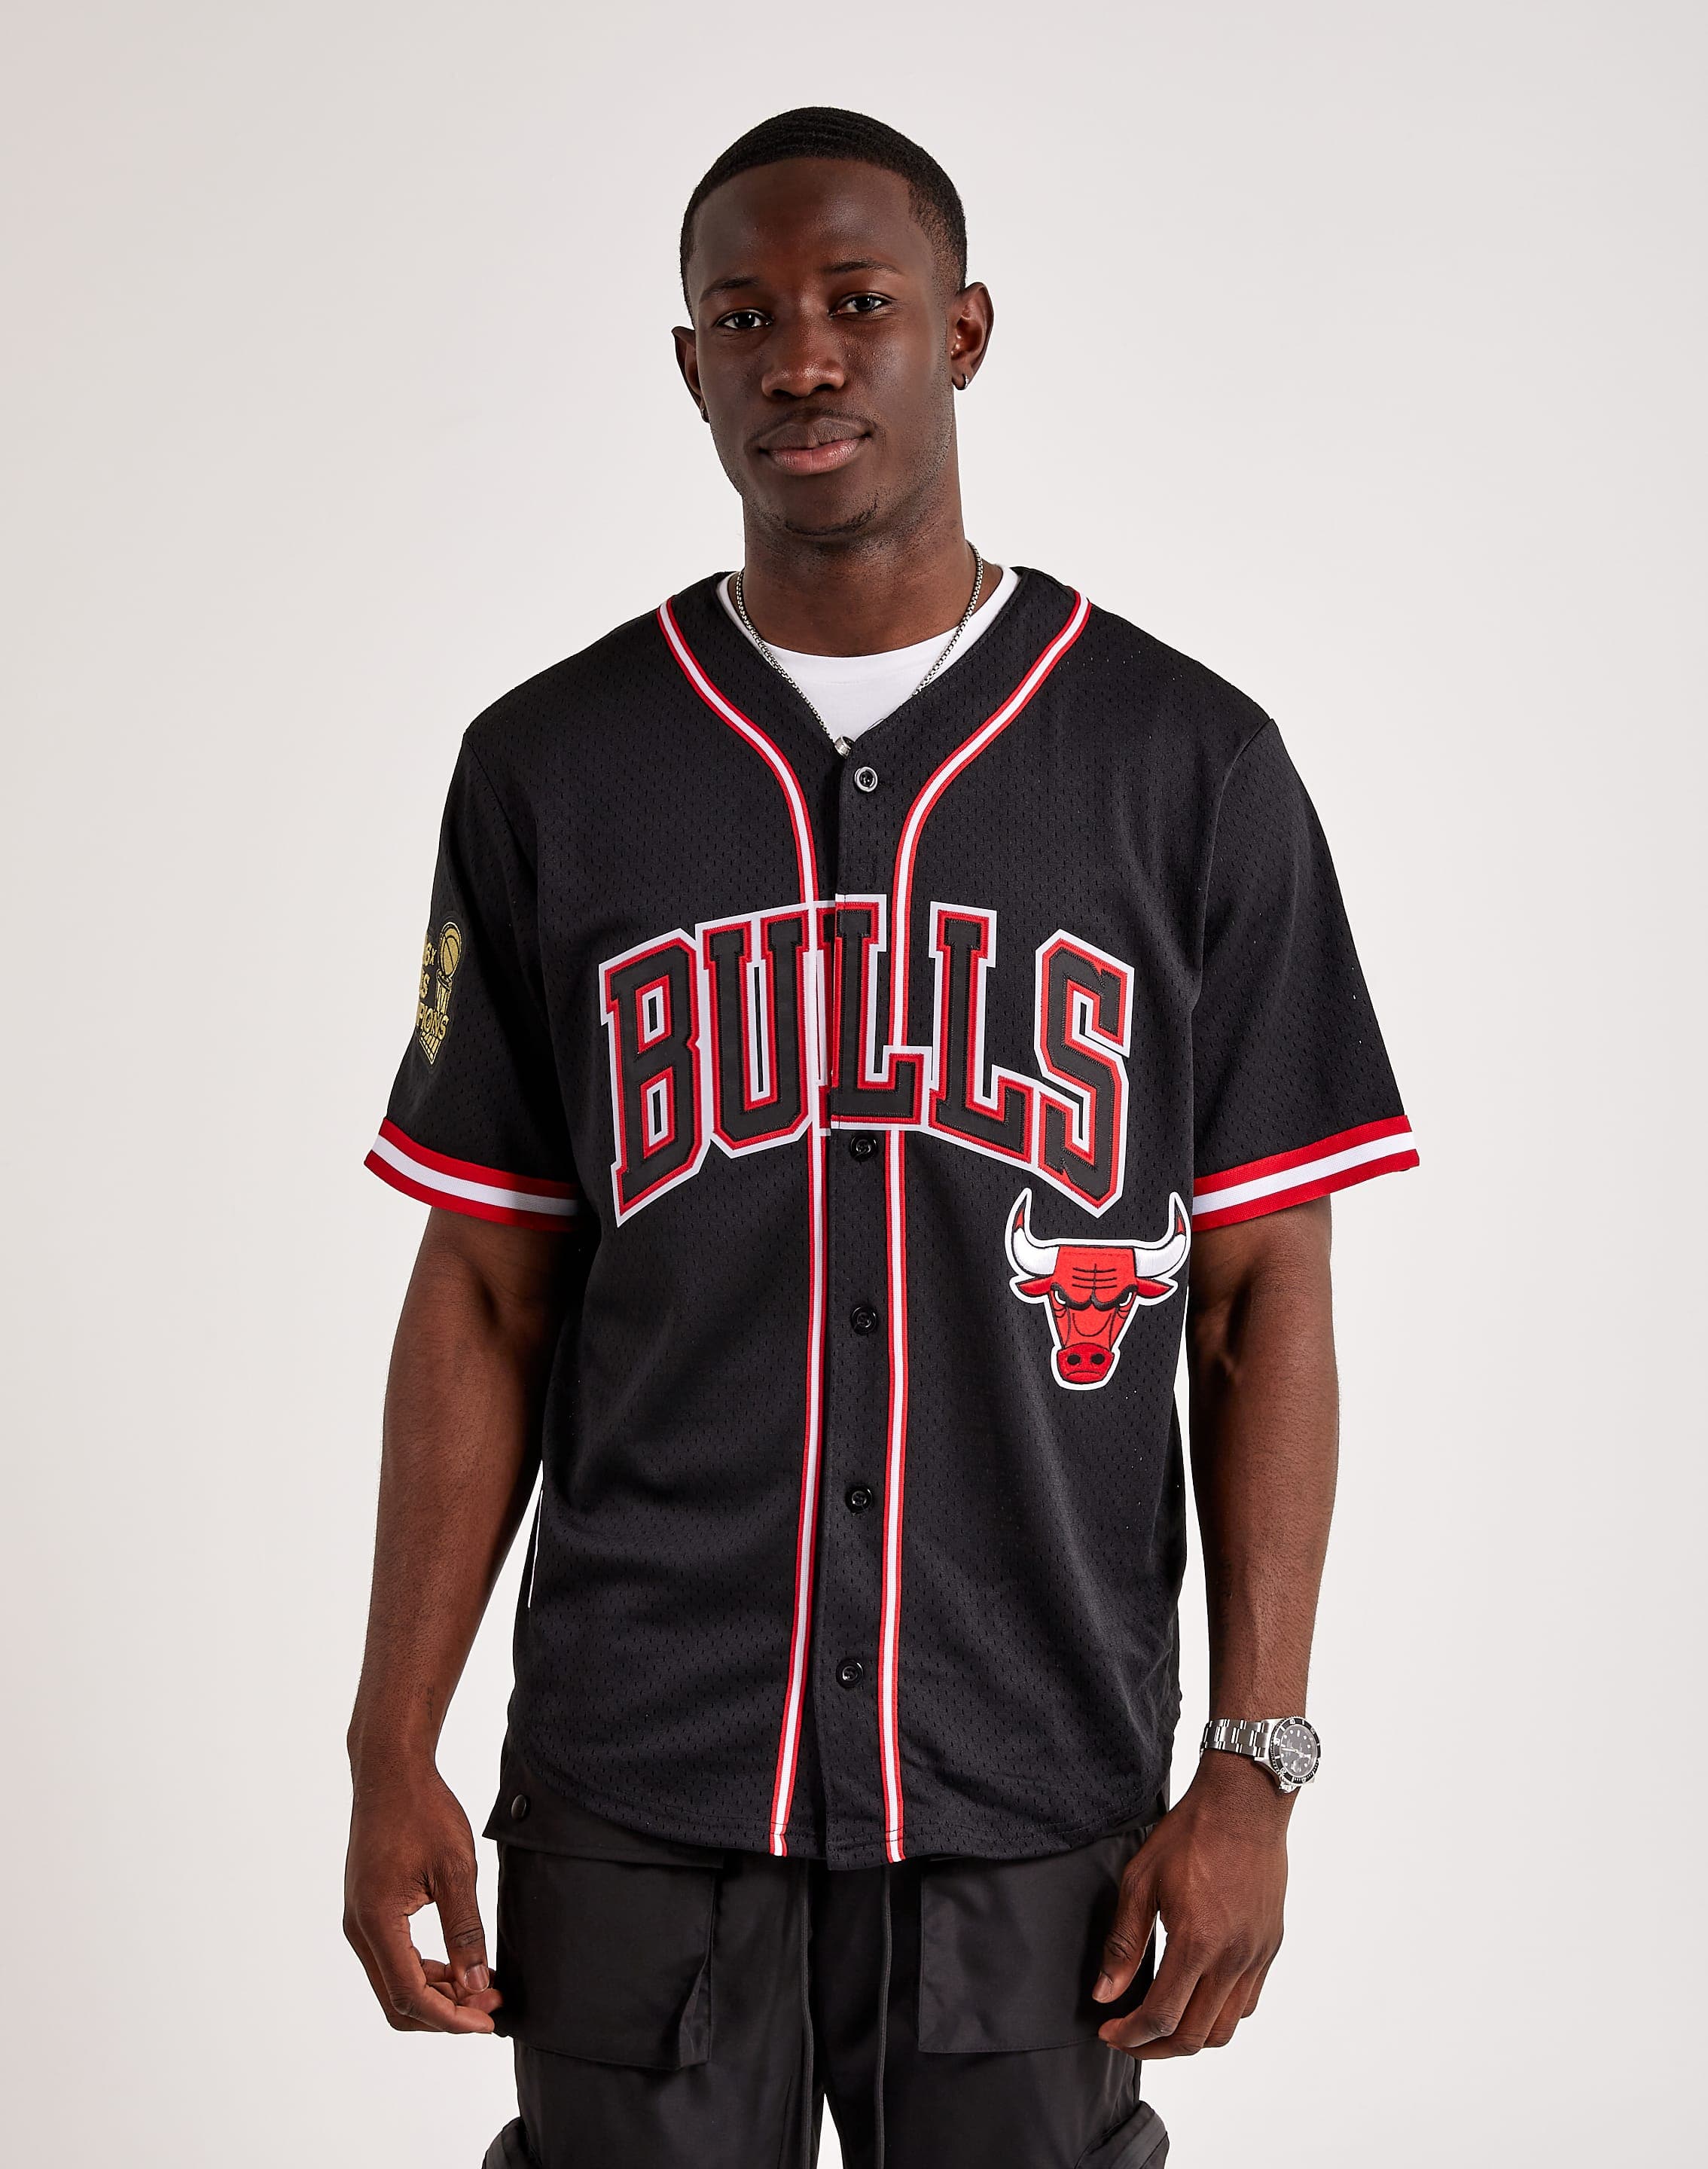 Chicago Bulls Mens Apparel & Gifts, Mens Bulls Clothing